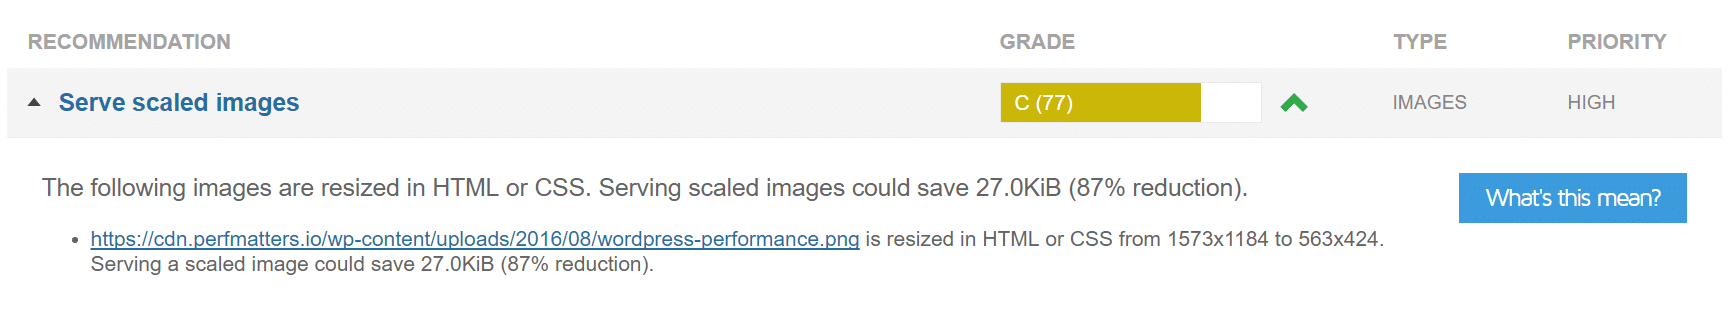 Servire immagini ridotte (Serve scaled images)